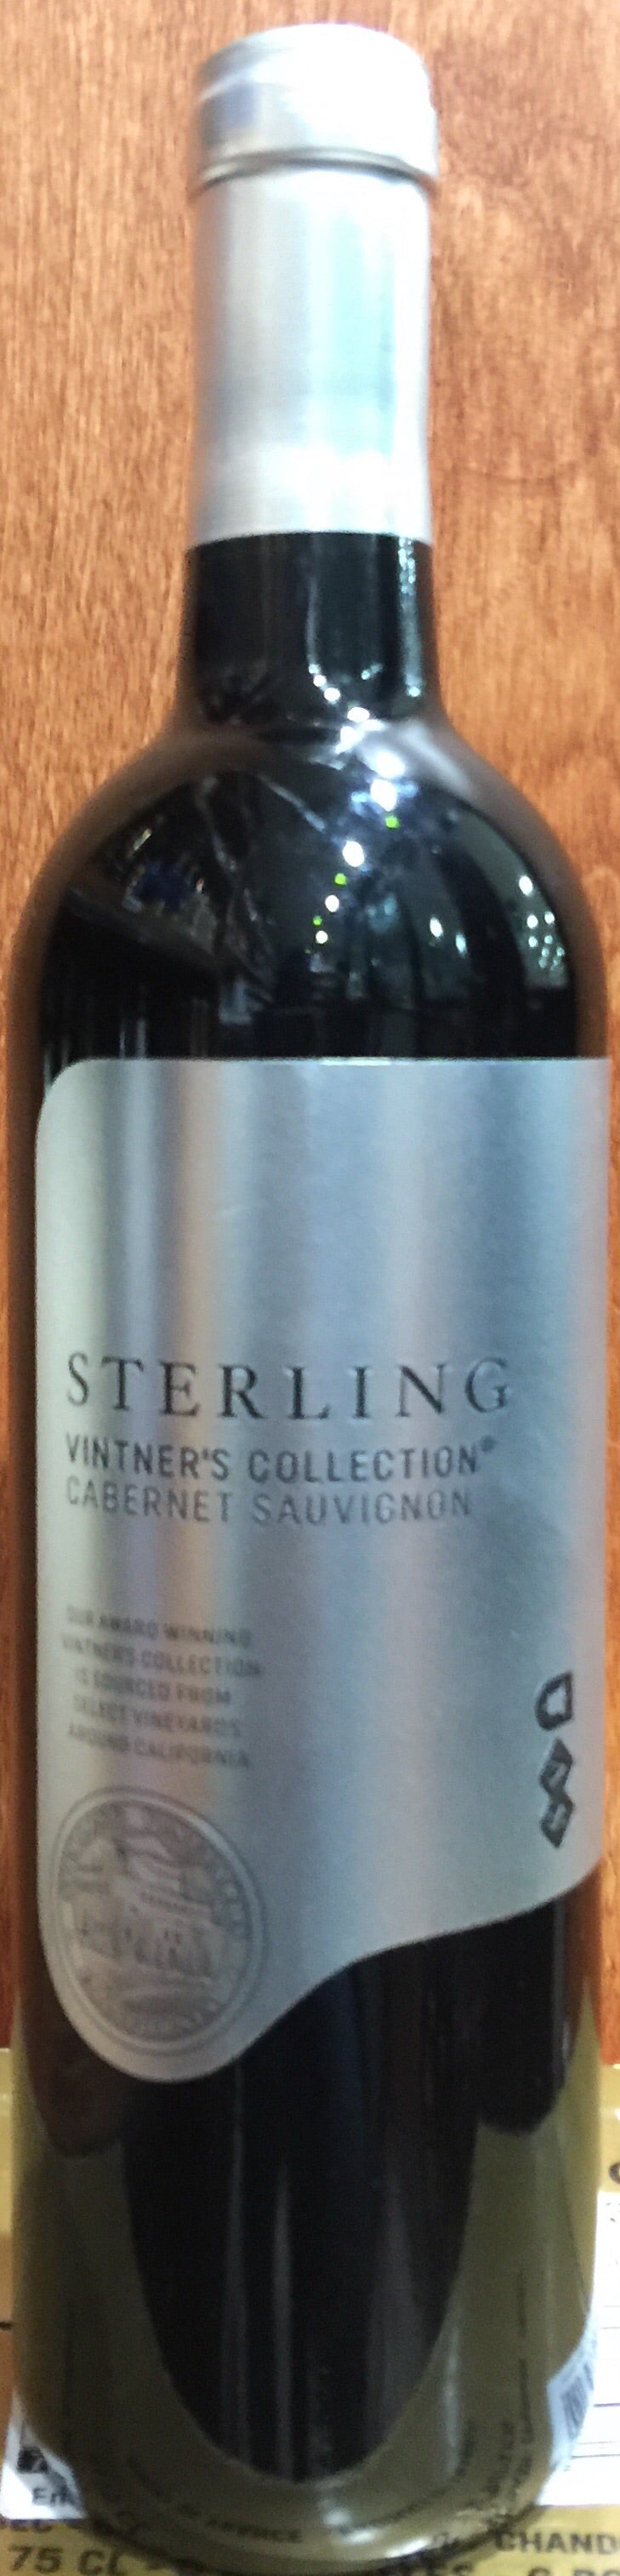 STERLING VINTNER'S COLLECTION CABERNET SAUVIGNON - Bk Wine Depot Corp